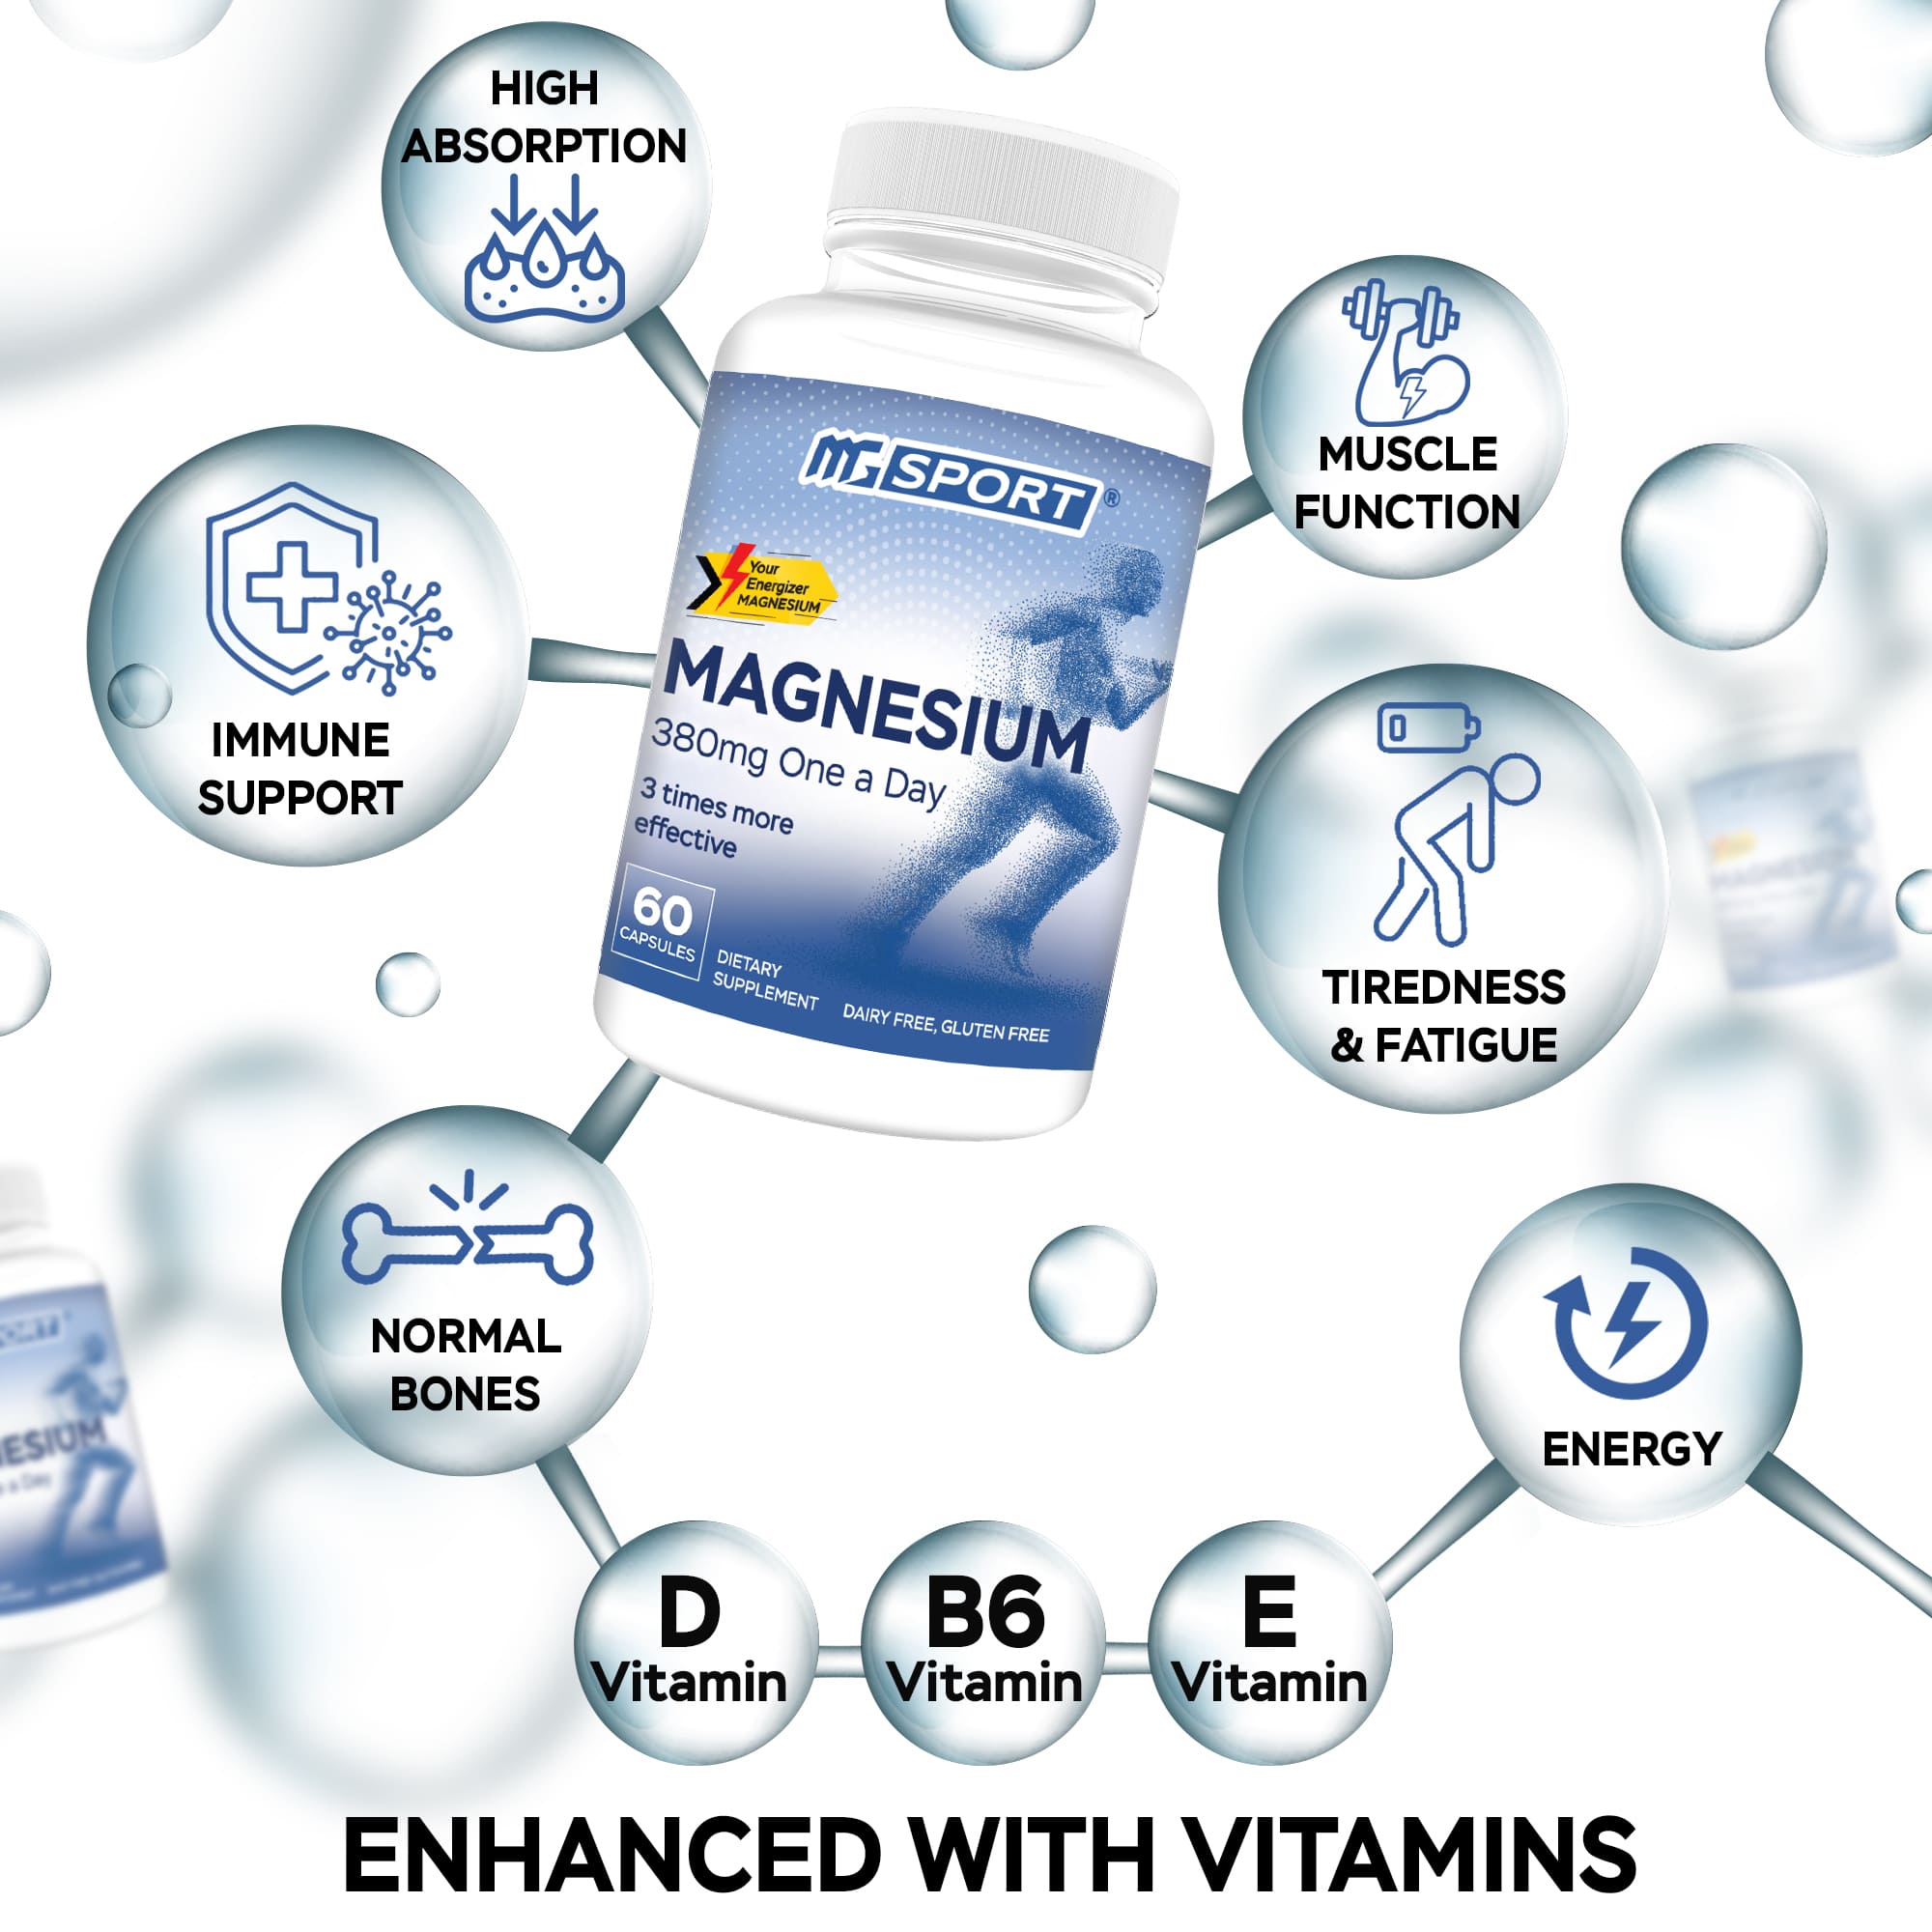 mangesium-60-tablets-benefits